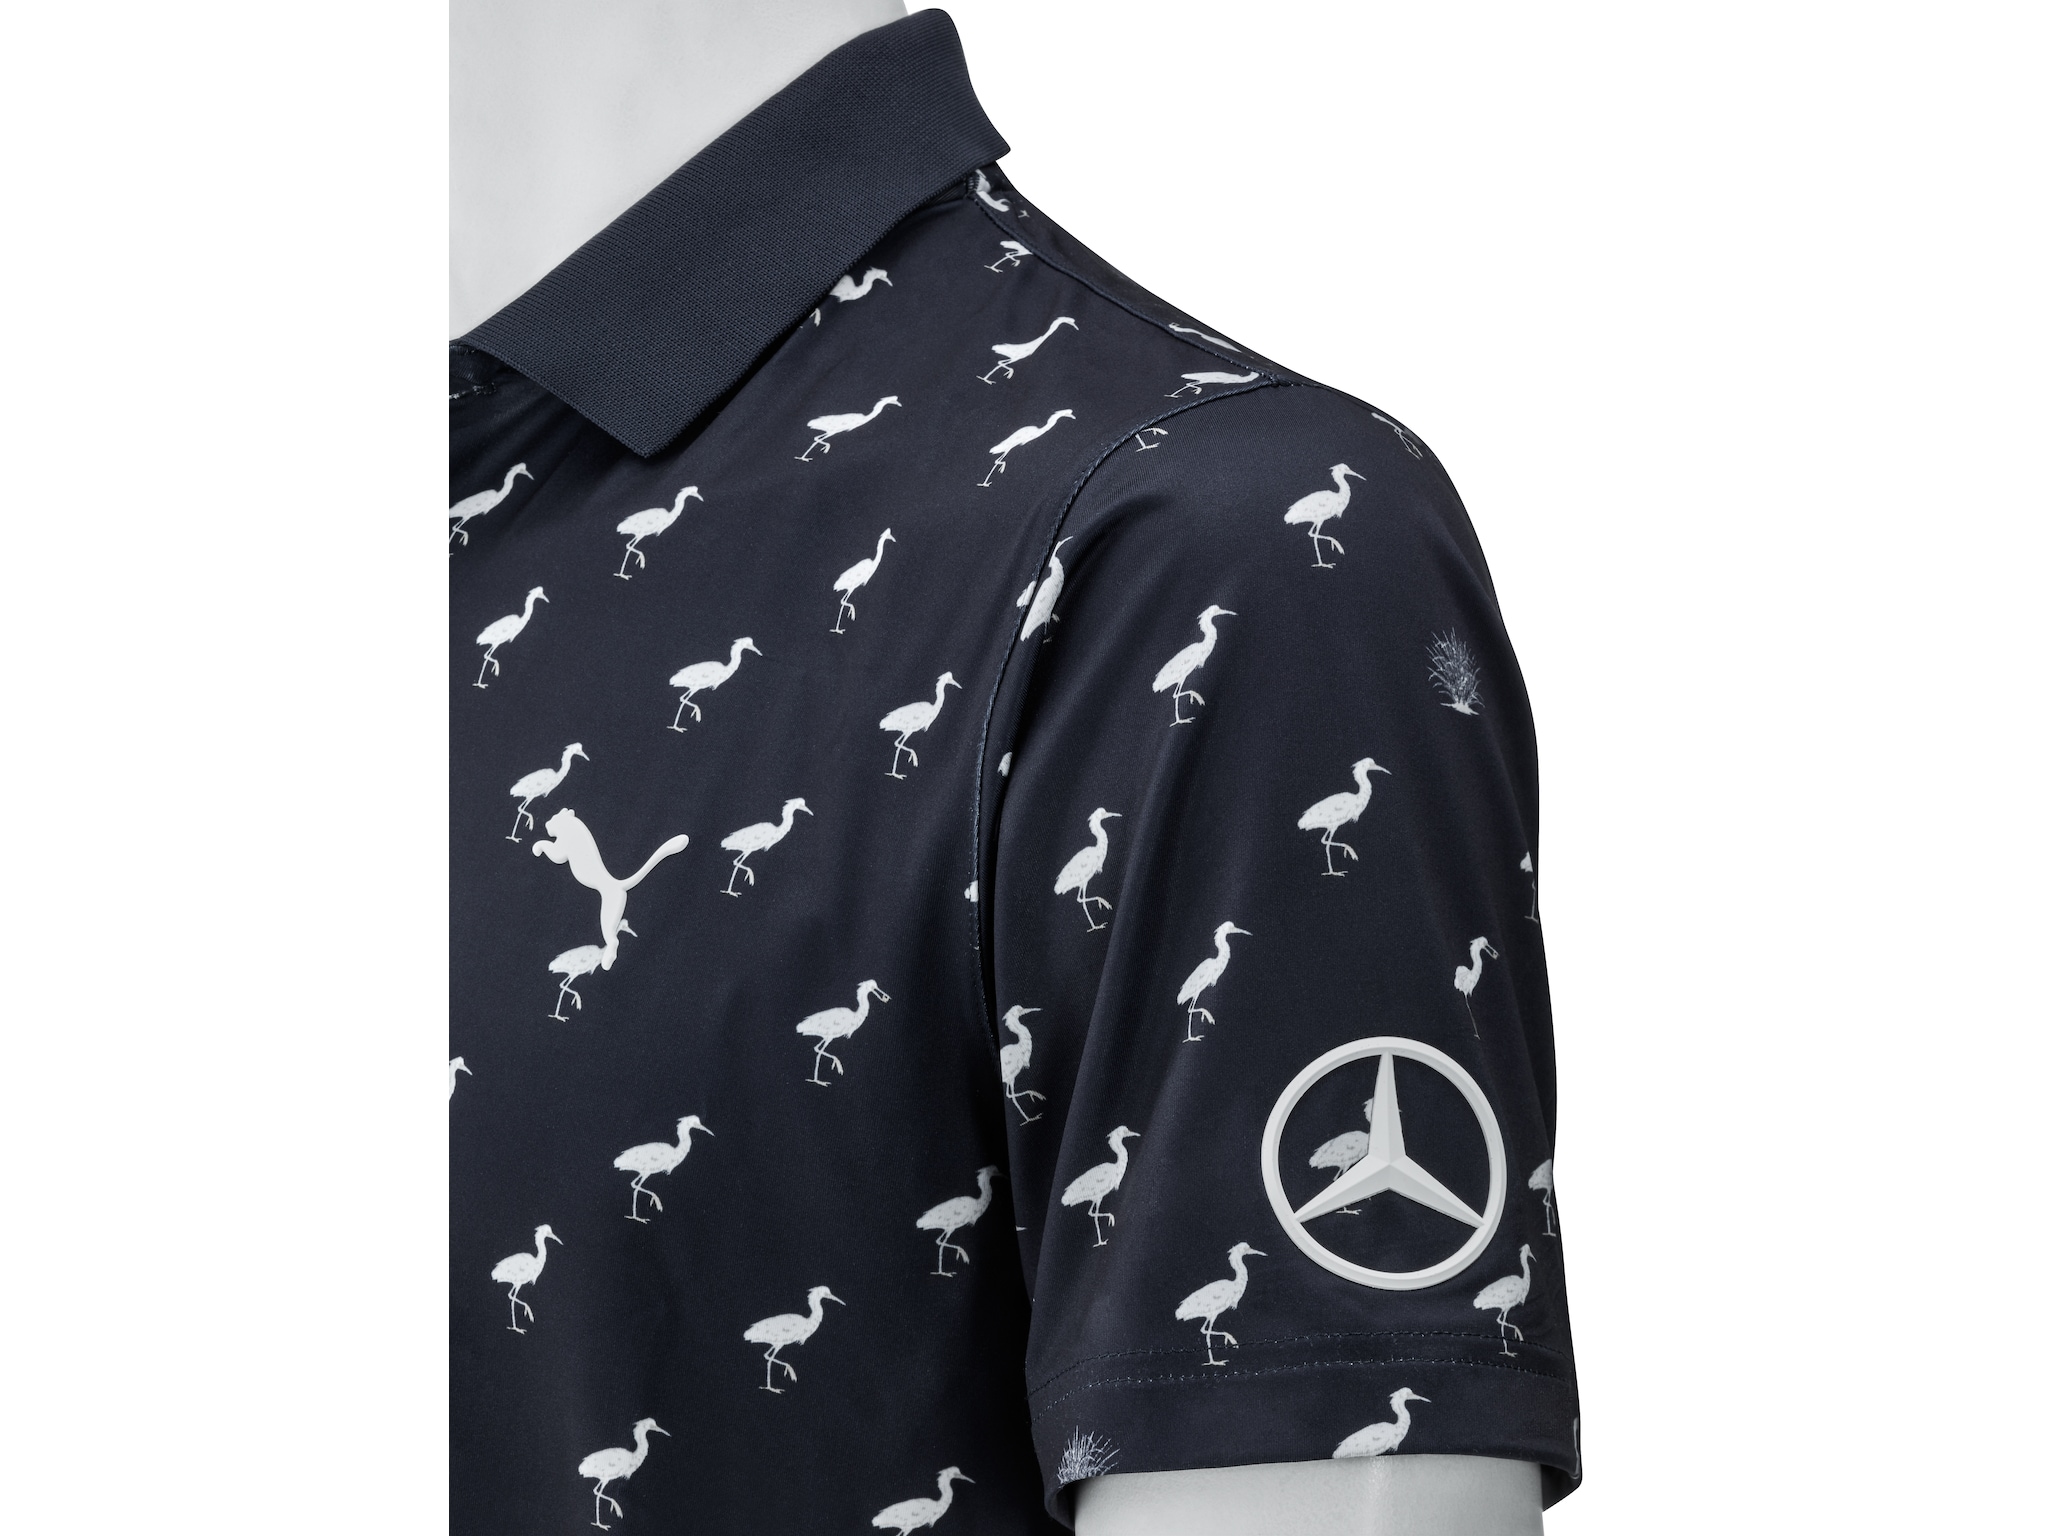 Golf-Poloshirt Herren - navy, XXL